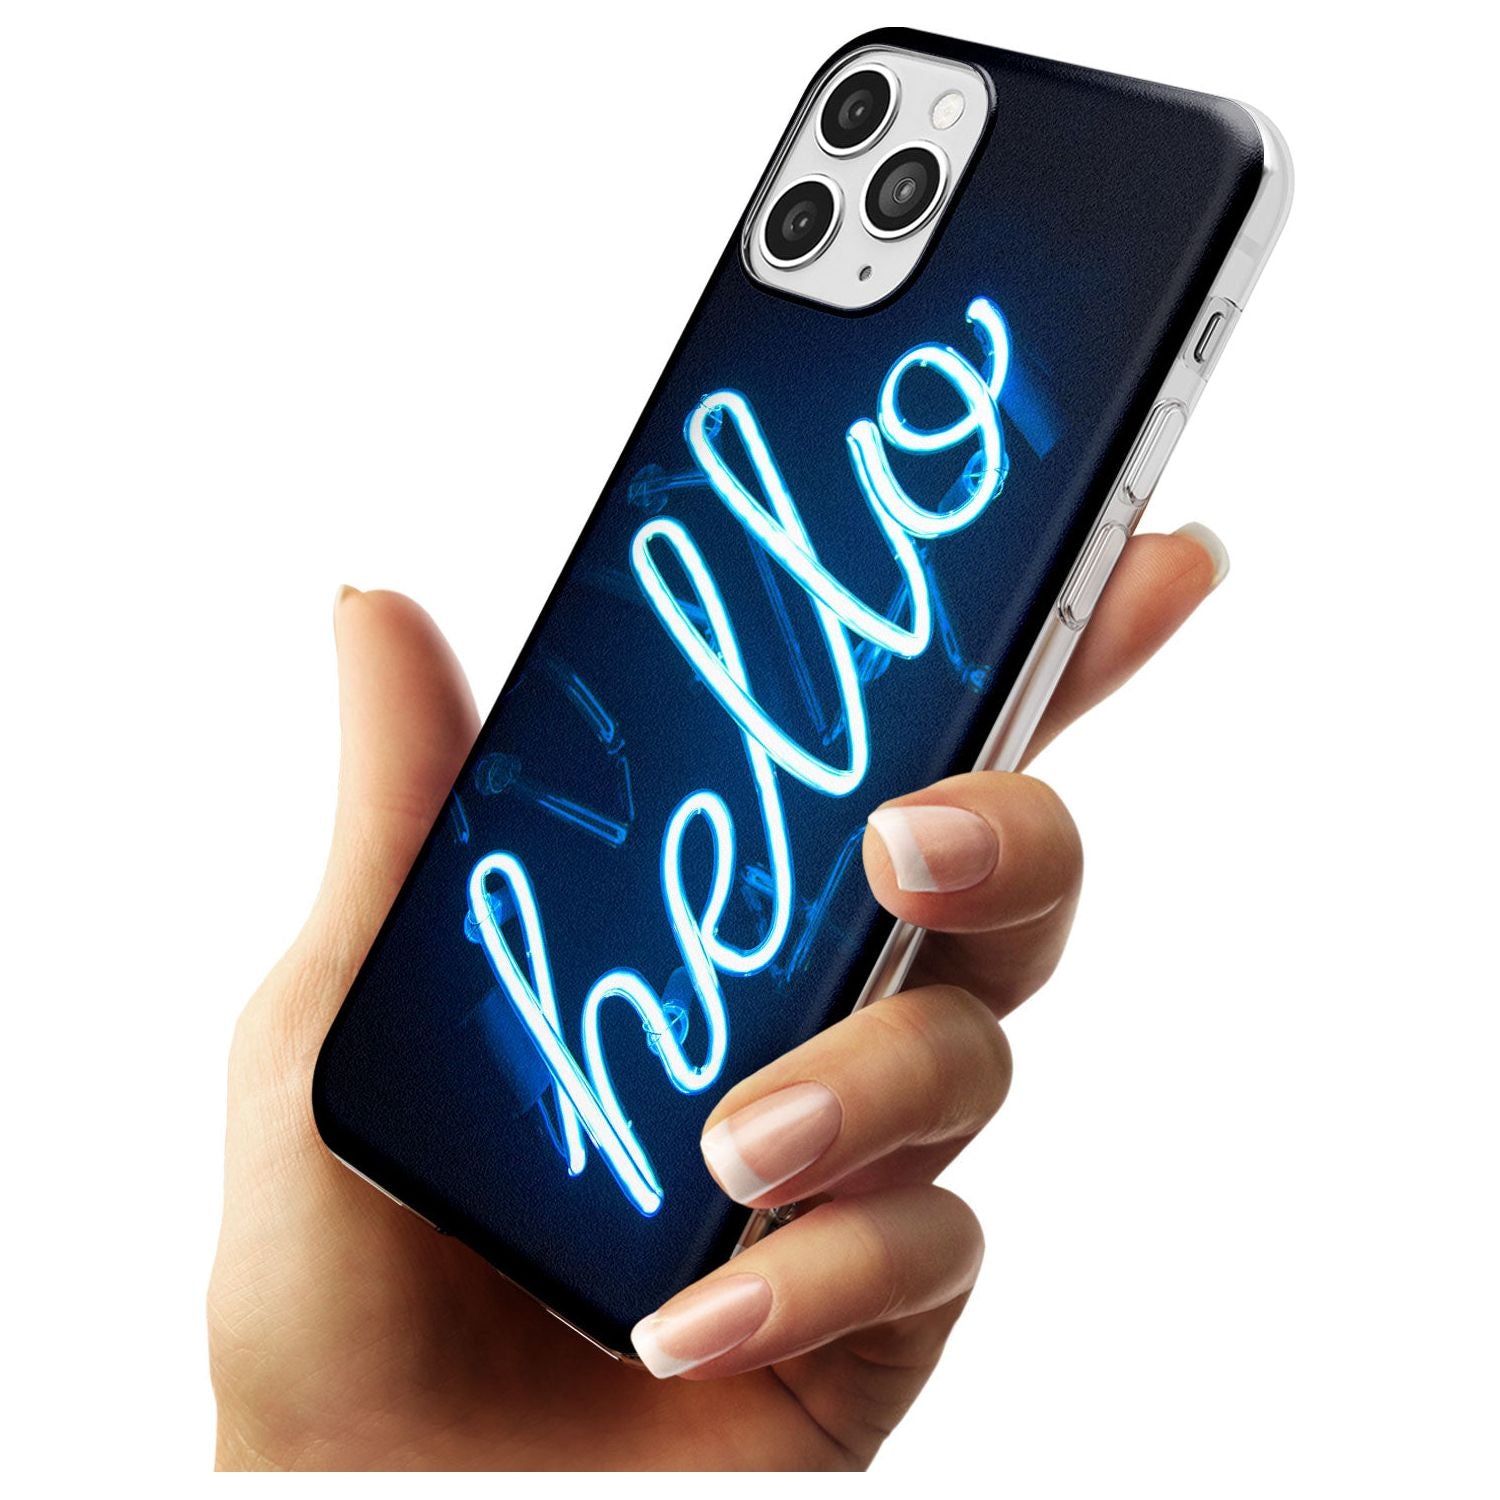 "Hello" Blue Cursive Neon Sign Slim TPU Phone Case for iPhone 11 Pro Max